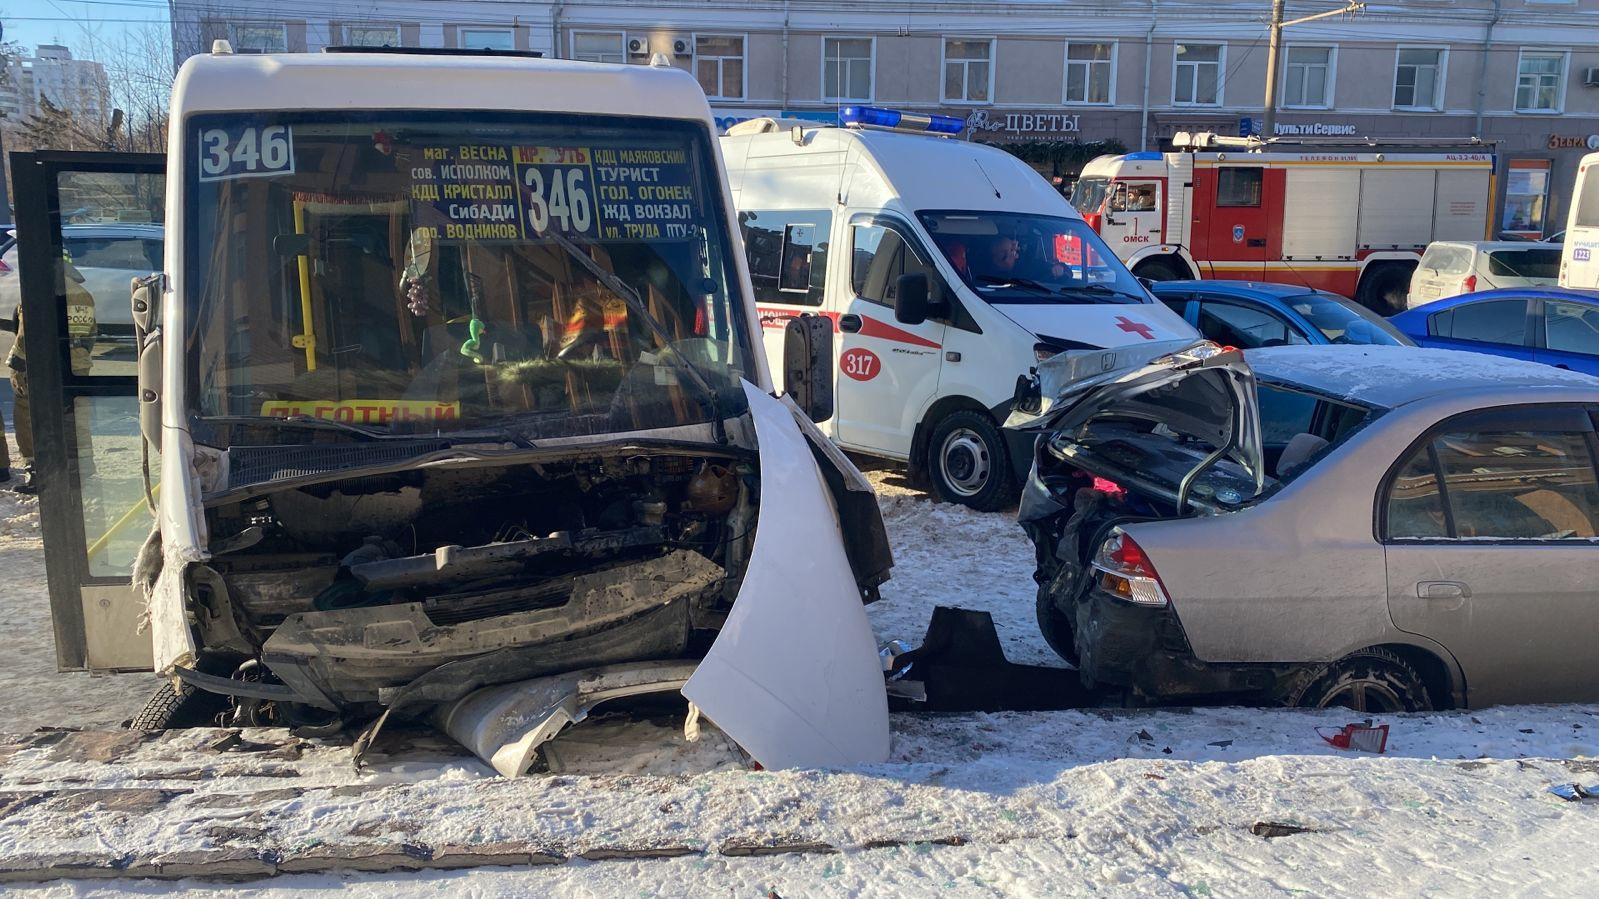 LNG fdnj,ECF B fdnj. Автобус врезался в машину. 12 января 19 года